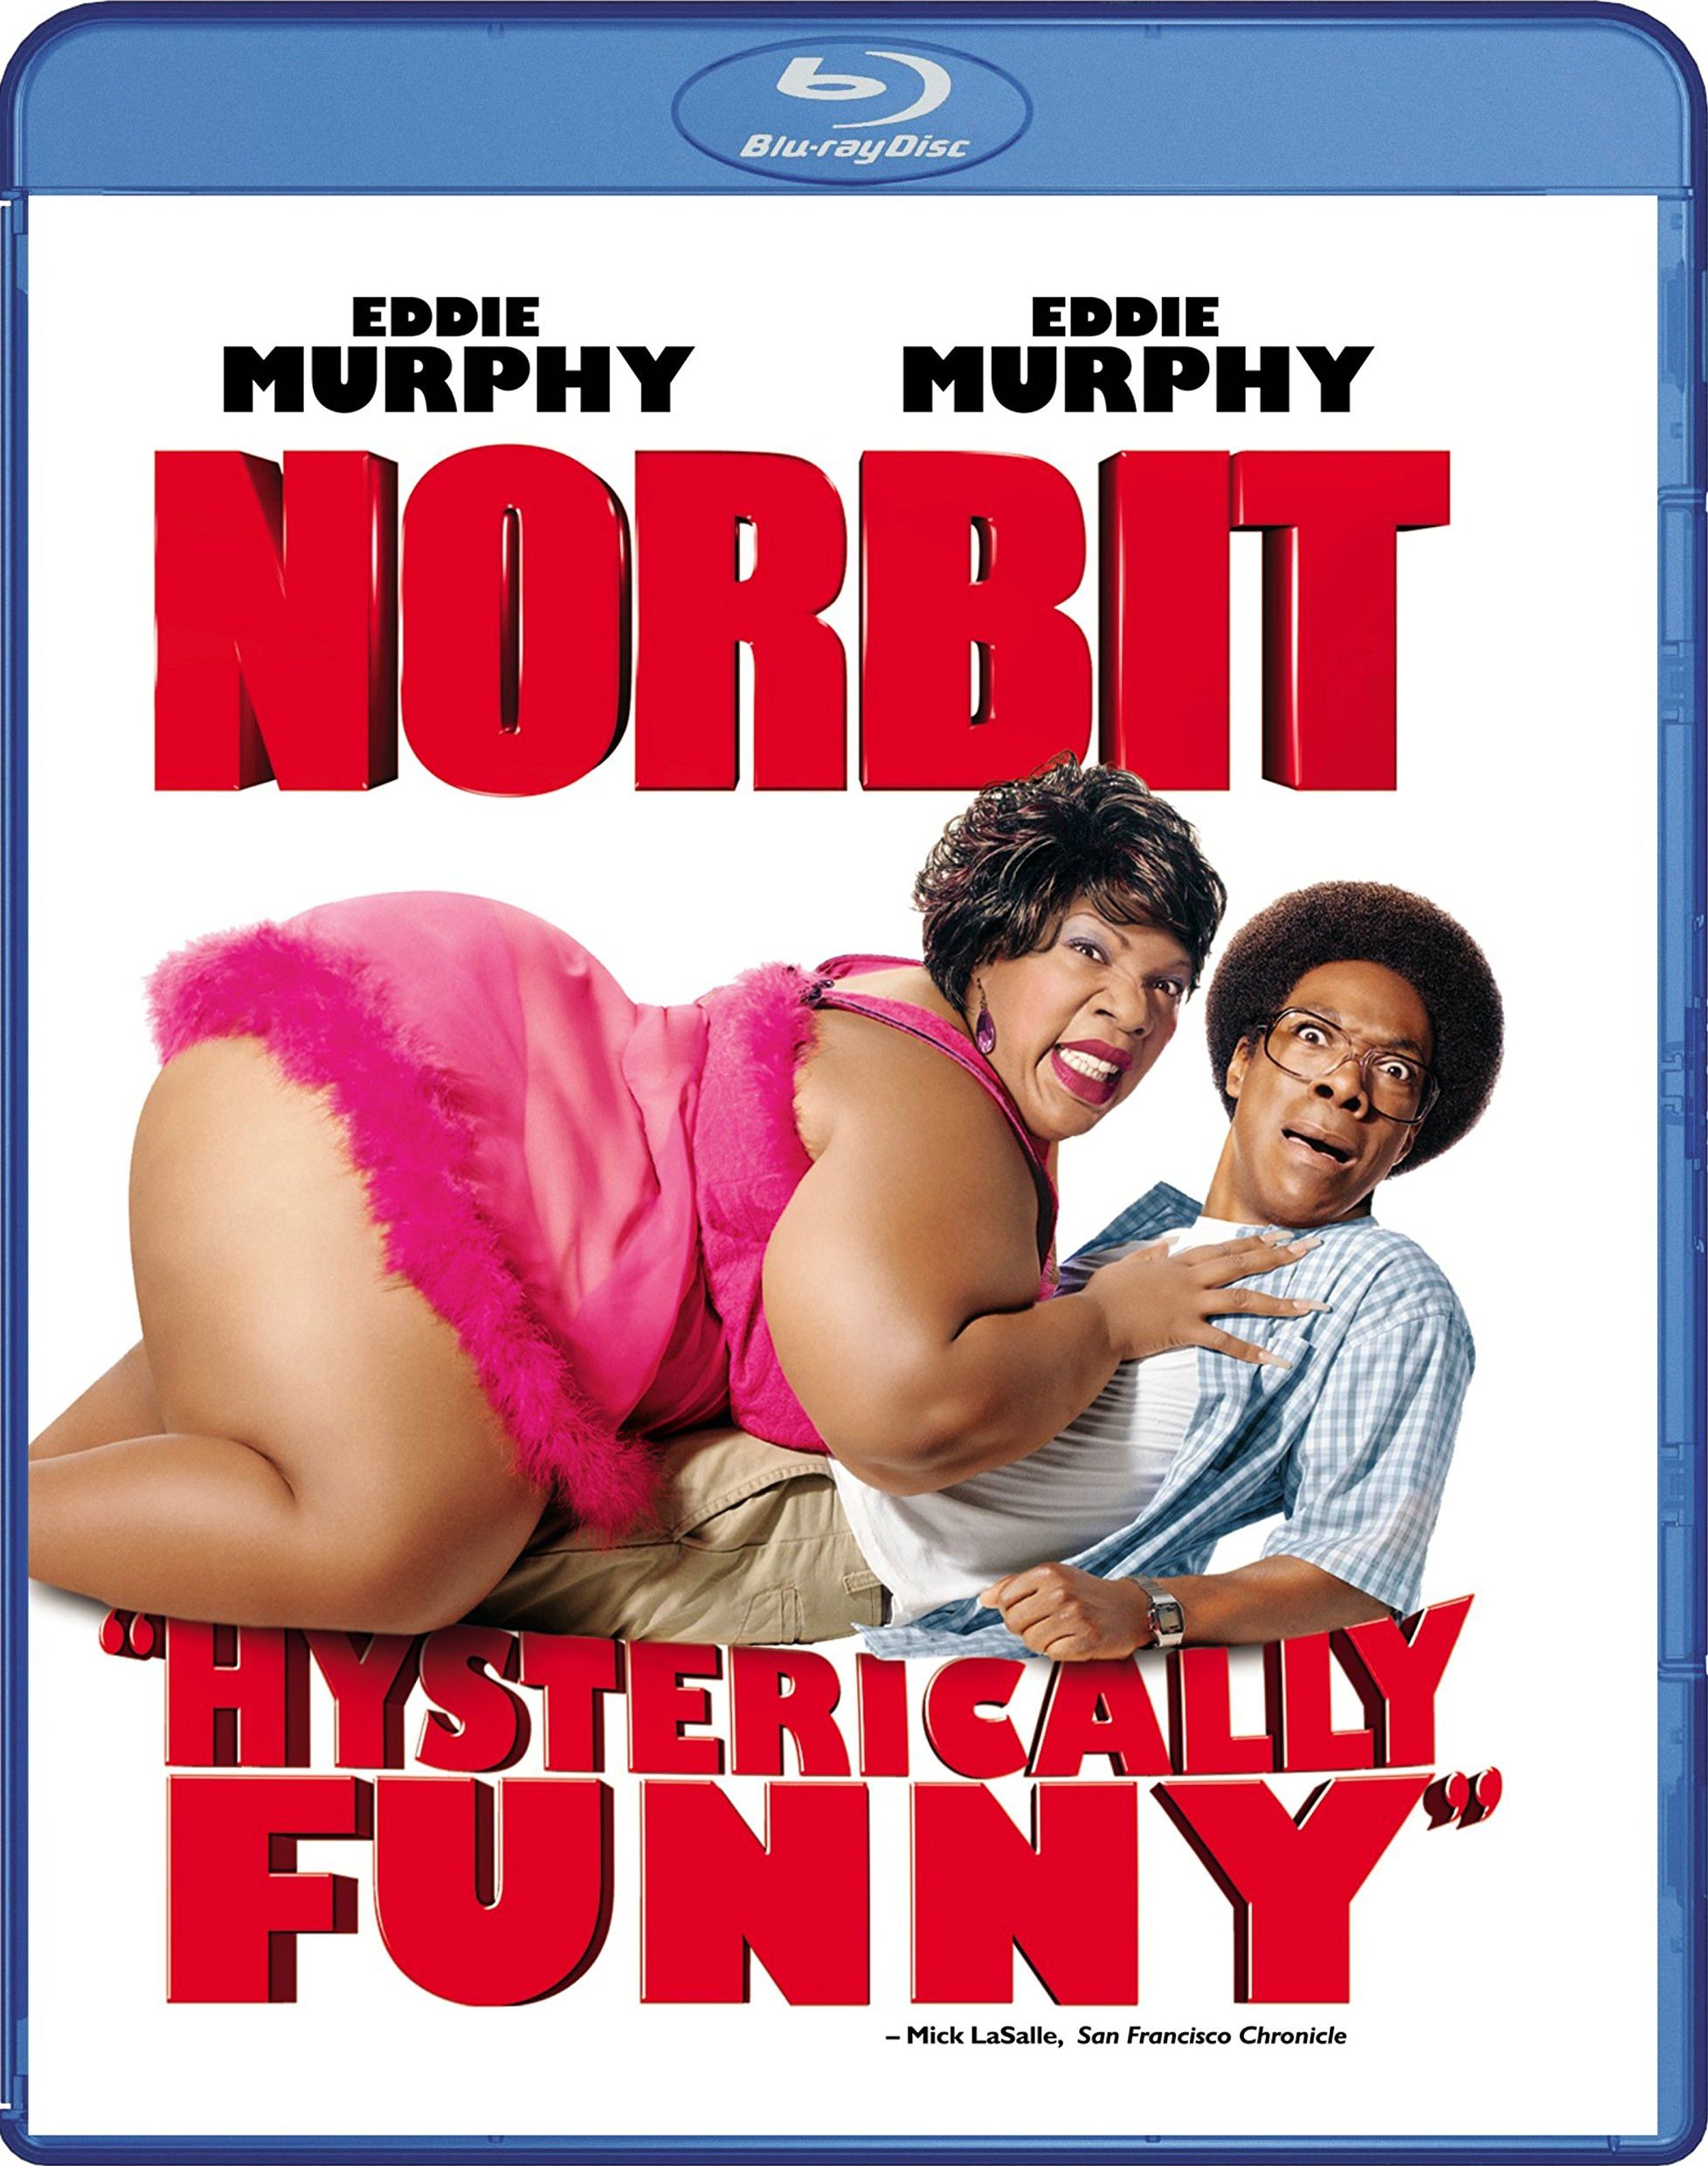 Название комедии. Уловки Норбита Мистер Вонг. Уловки Норбита (2007). Эдди Мерфи уловки Норбита. Norbit 2007 Eddie Murphy.